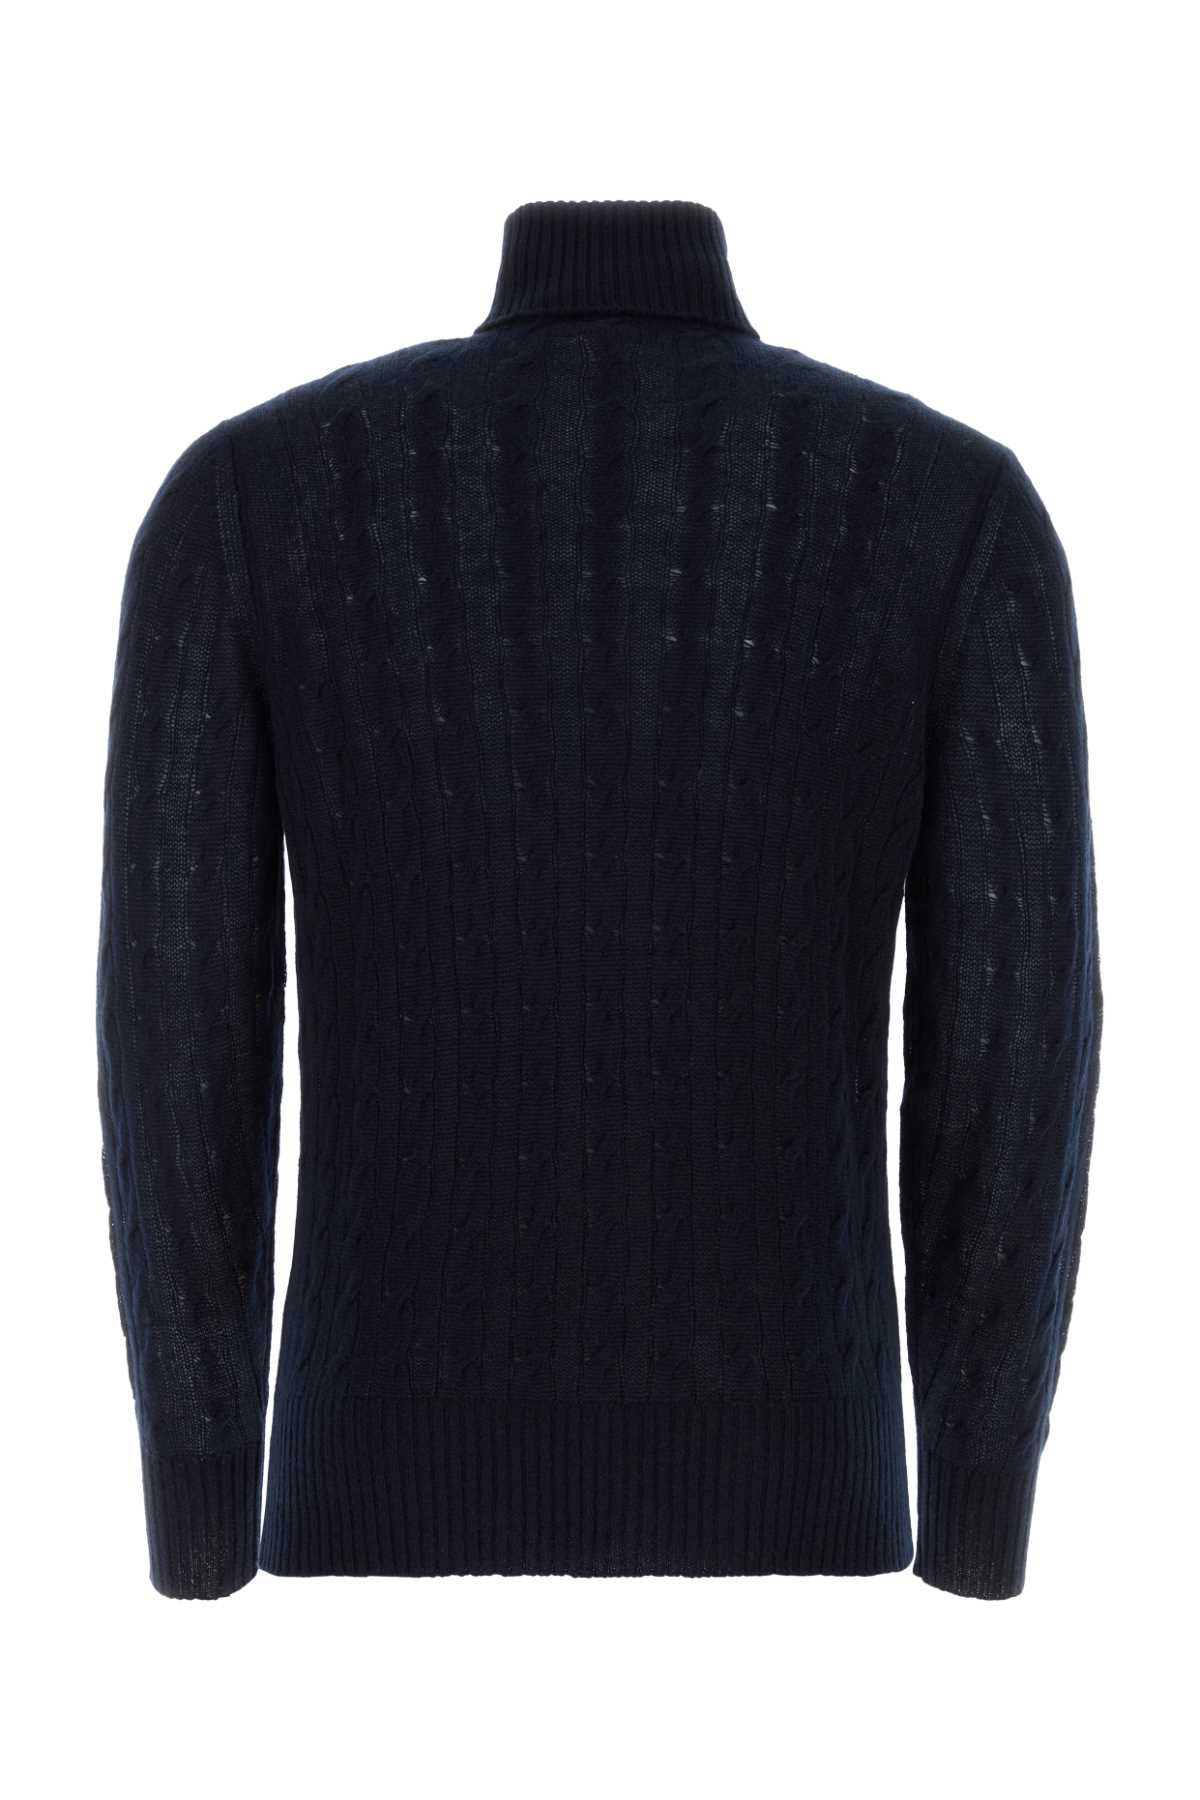 Etro Midnight Blue Cashmere Sweater